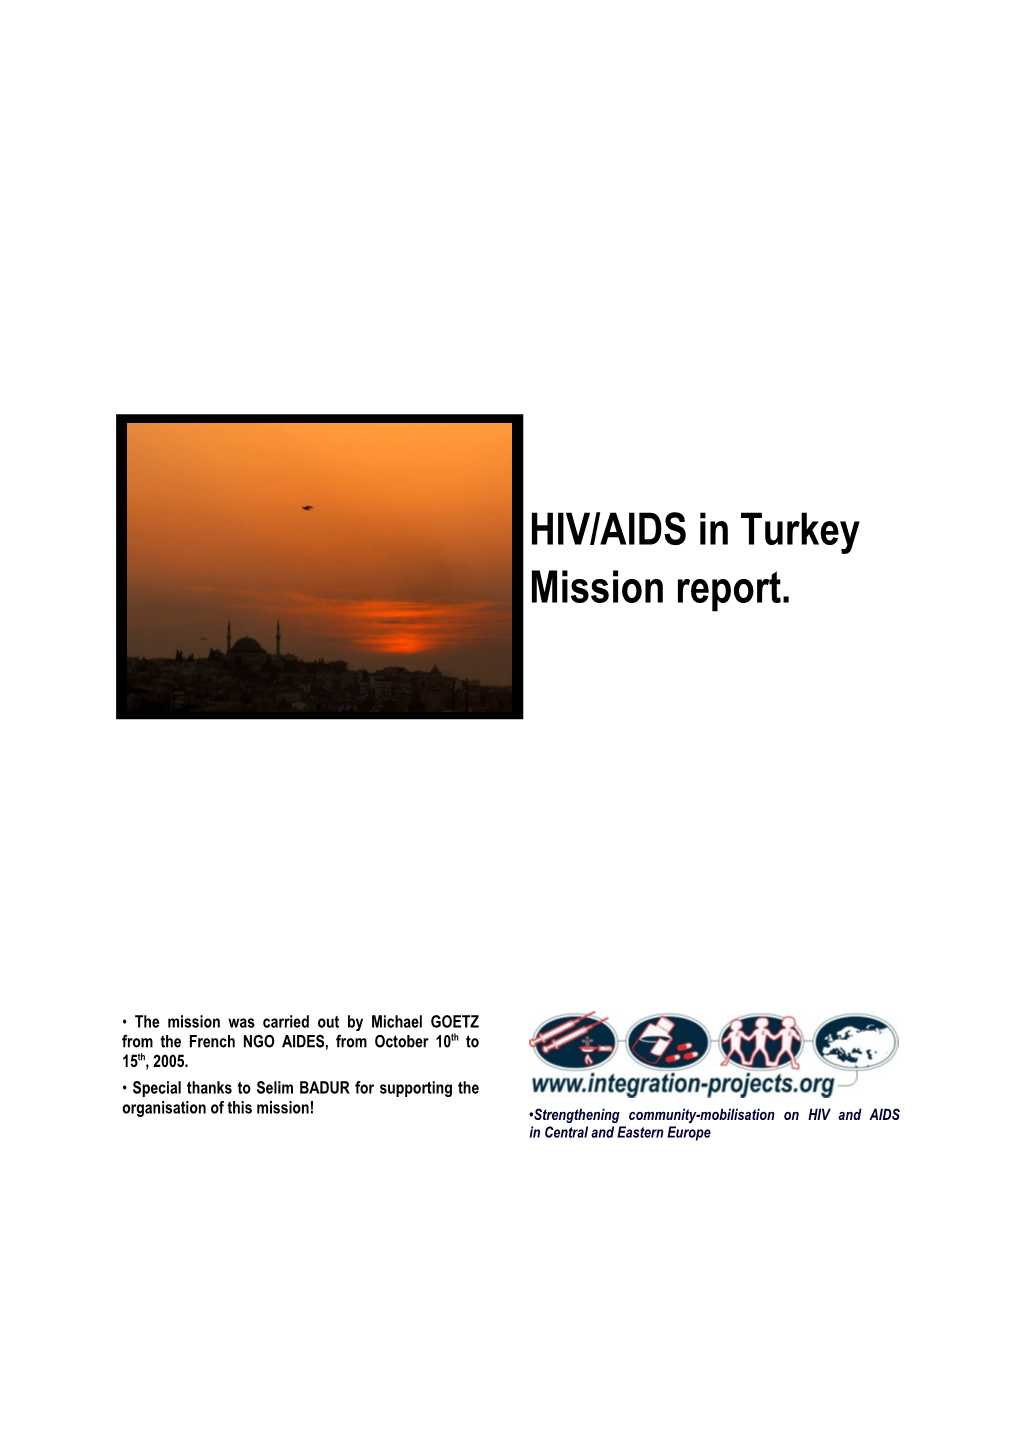 HIV/AIDS in Turkey Mission Report